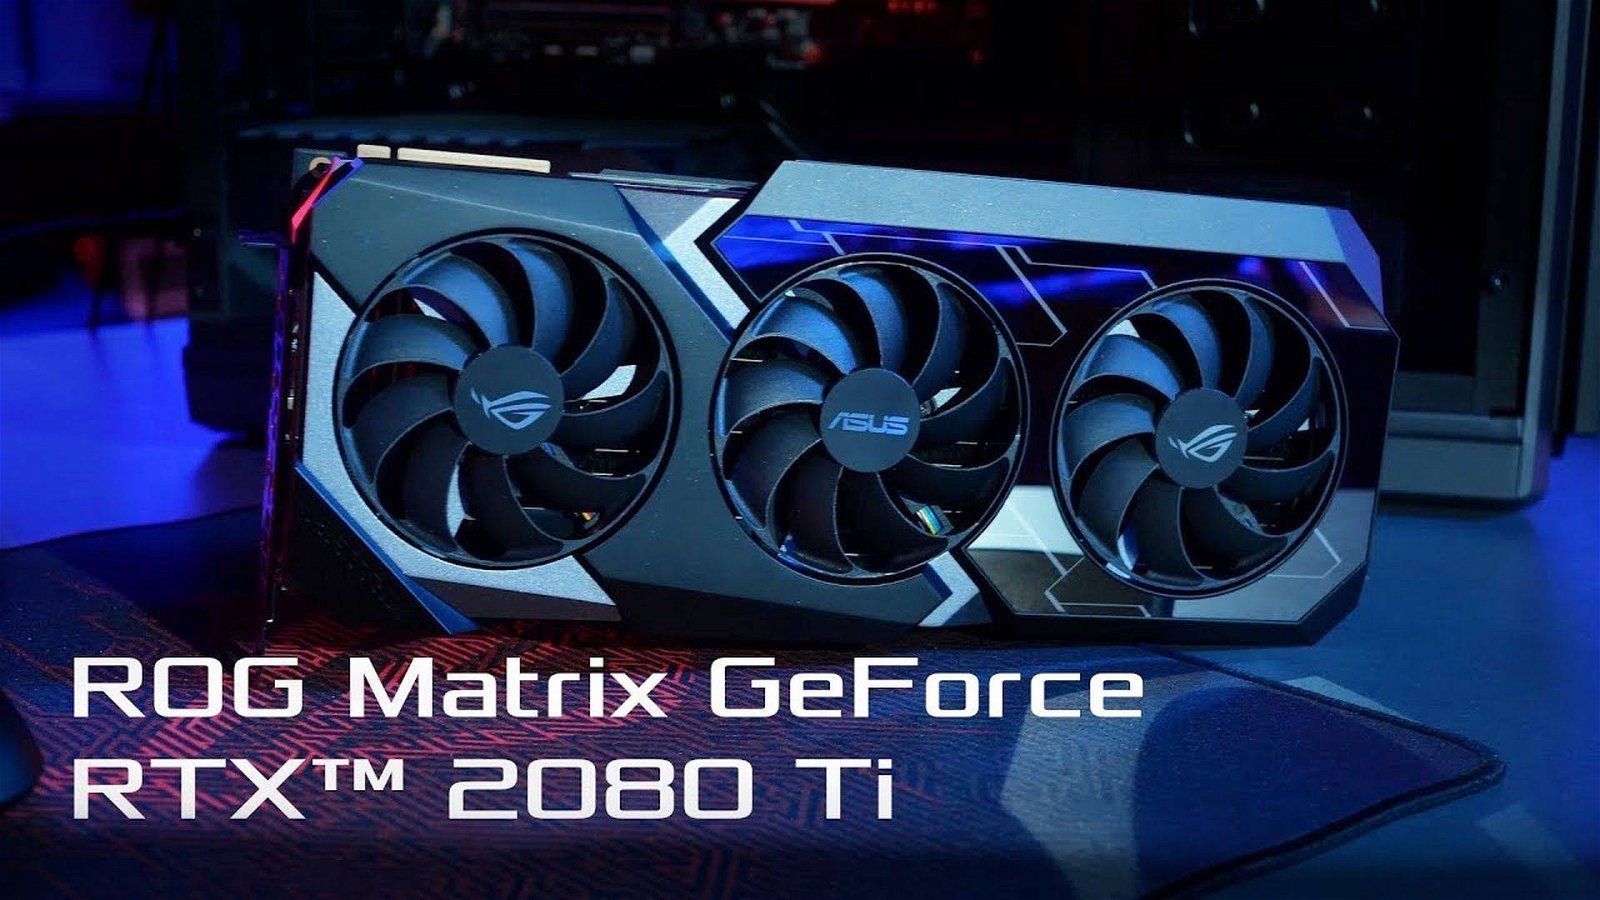 Immagine di ROG Matrix GeForce RTX 2080 Ti in Italia a 1799 euro